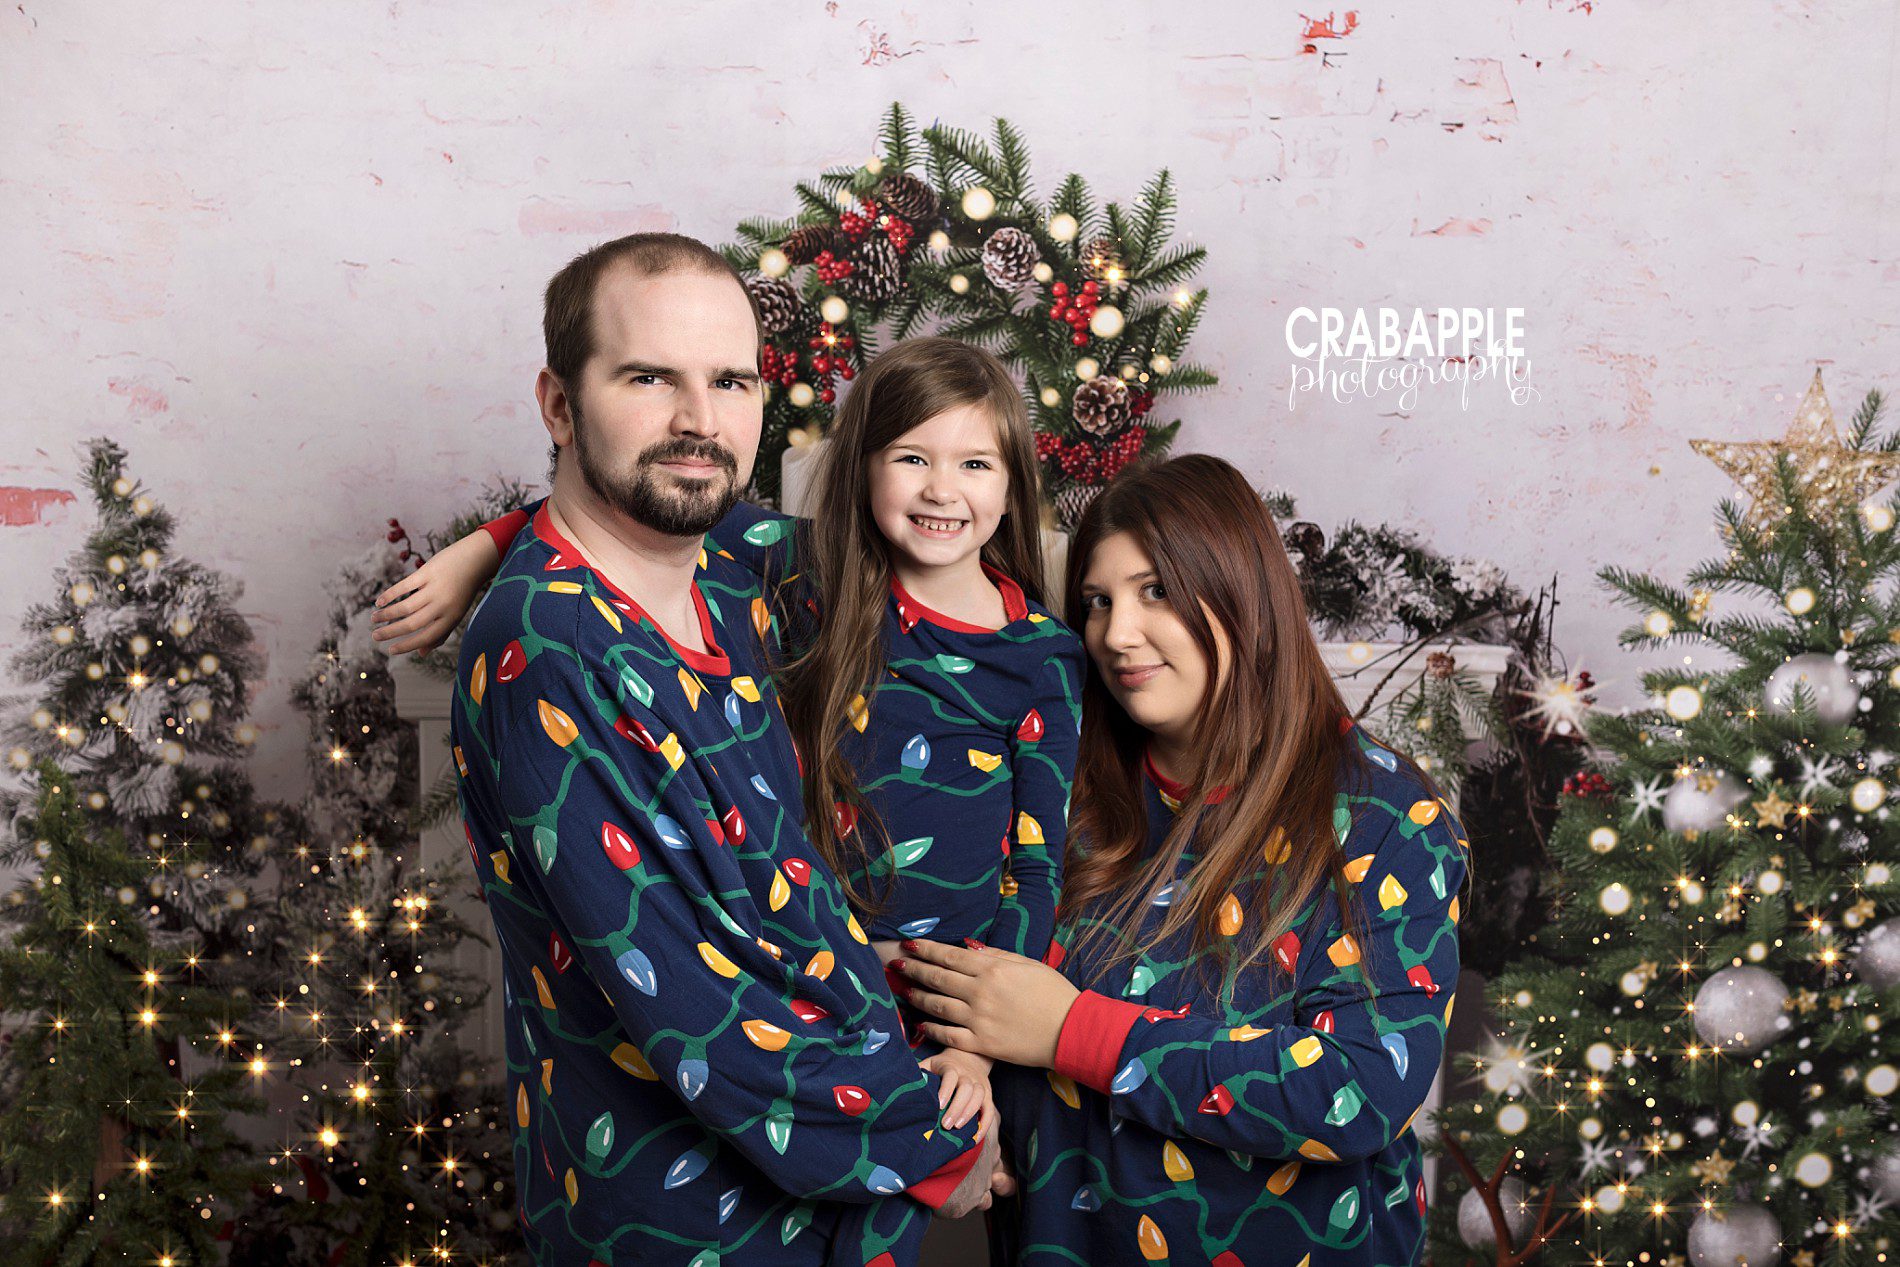 fun pajamas for christmas card photos for families